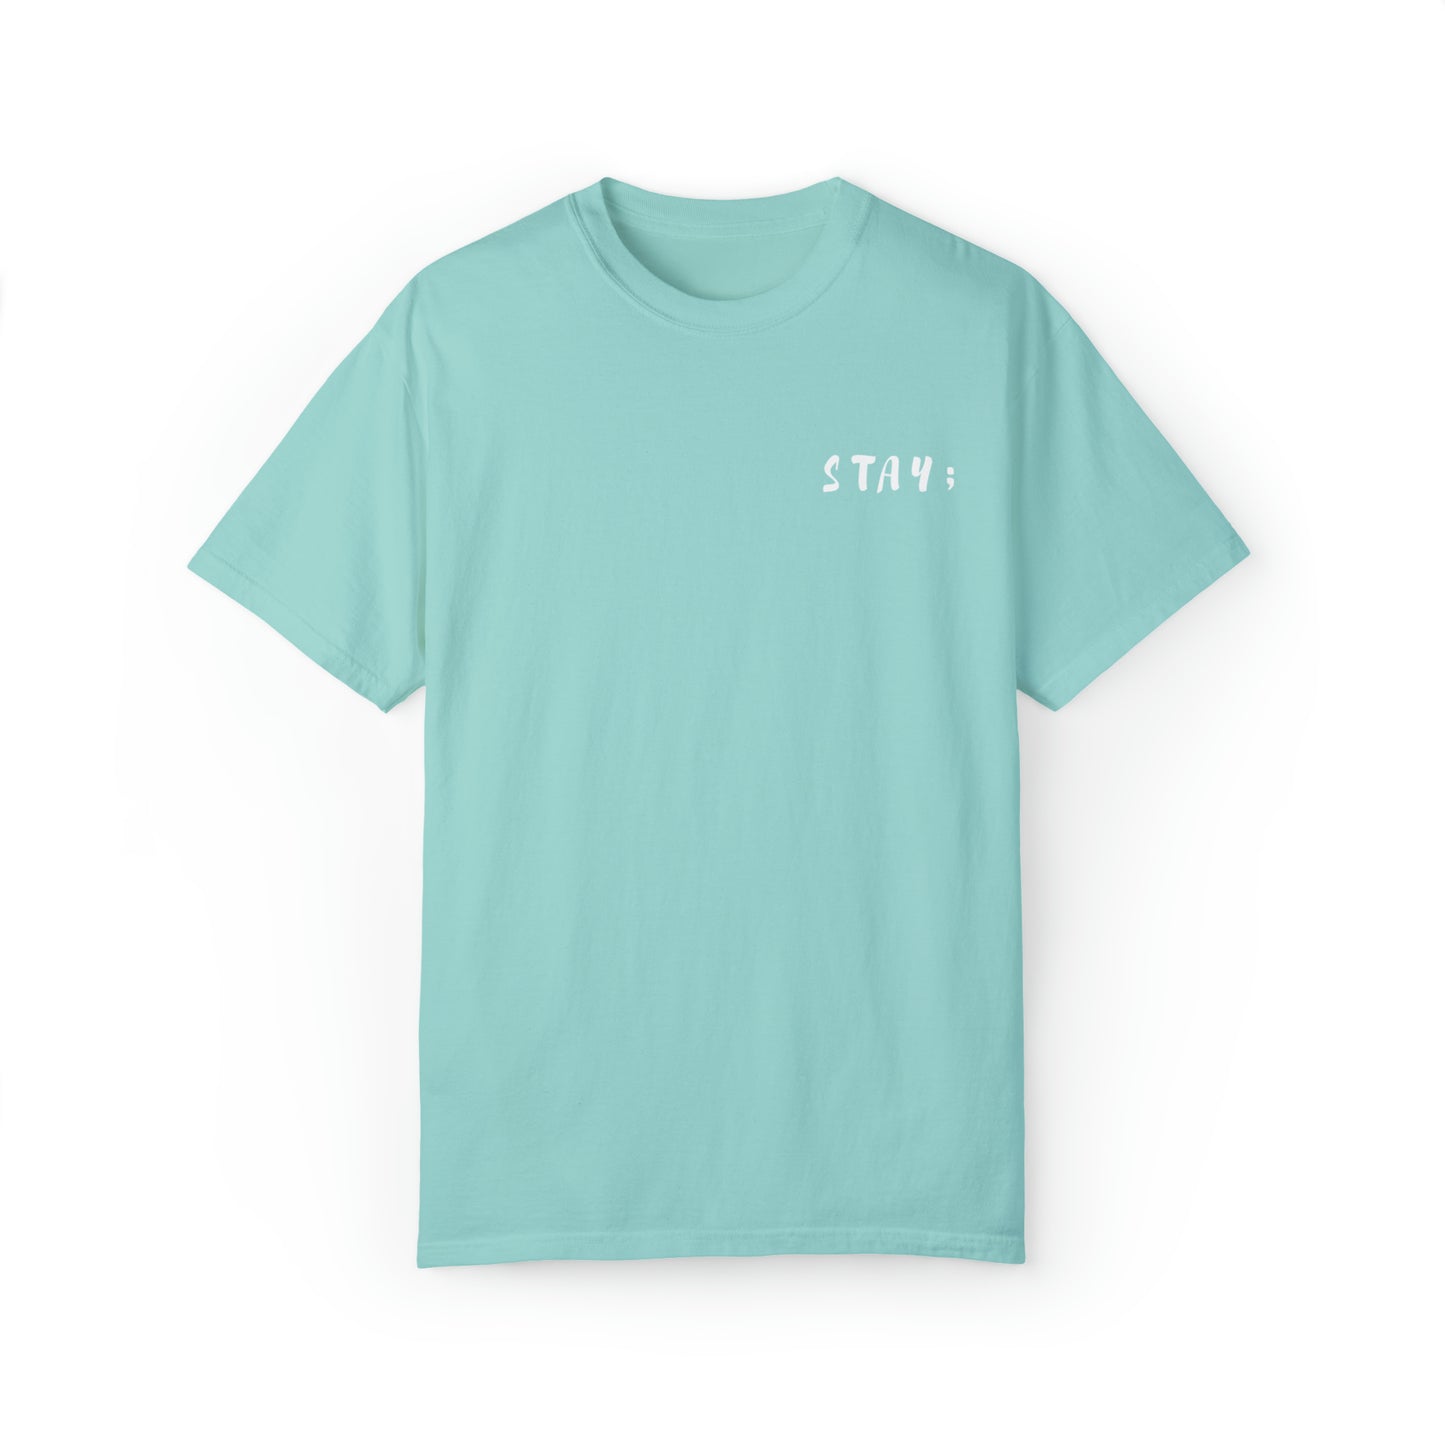 Stay; Tomorrow Needs You (988) T-Shirt